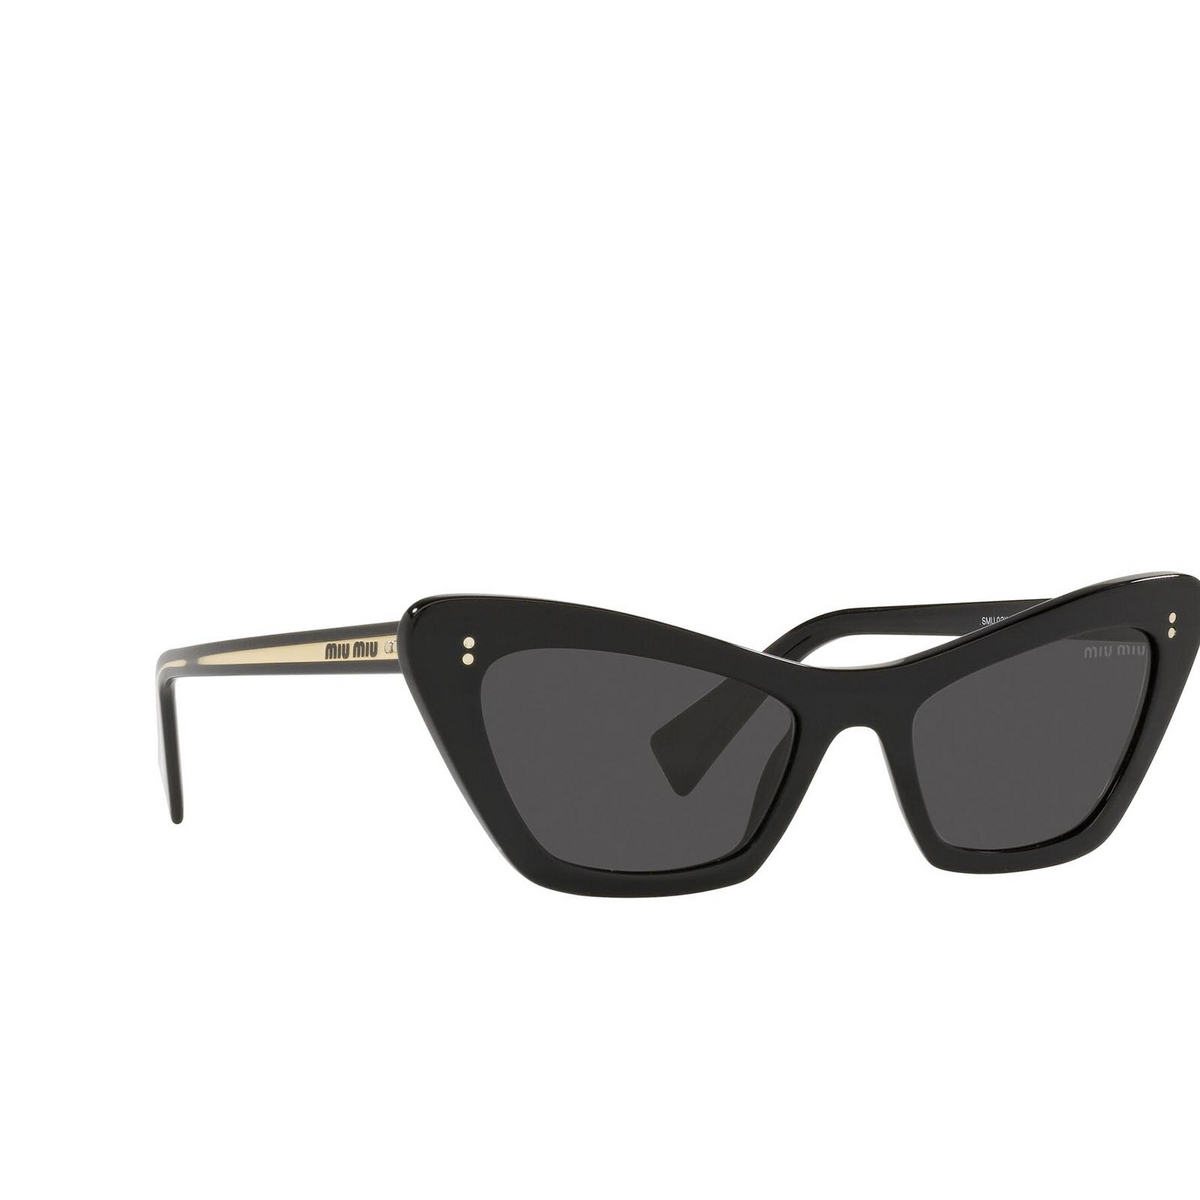 Miu Miu® Cat-eye Sunglasses: MU 03XS color Black 1AB5S0 - three-quarters view.